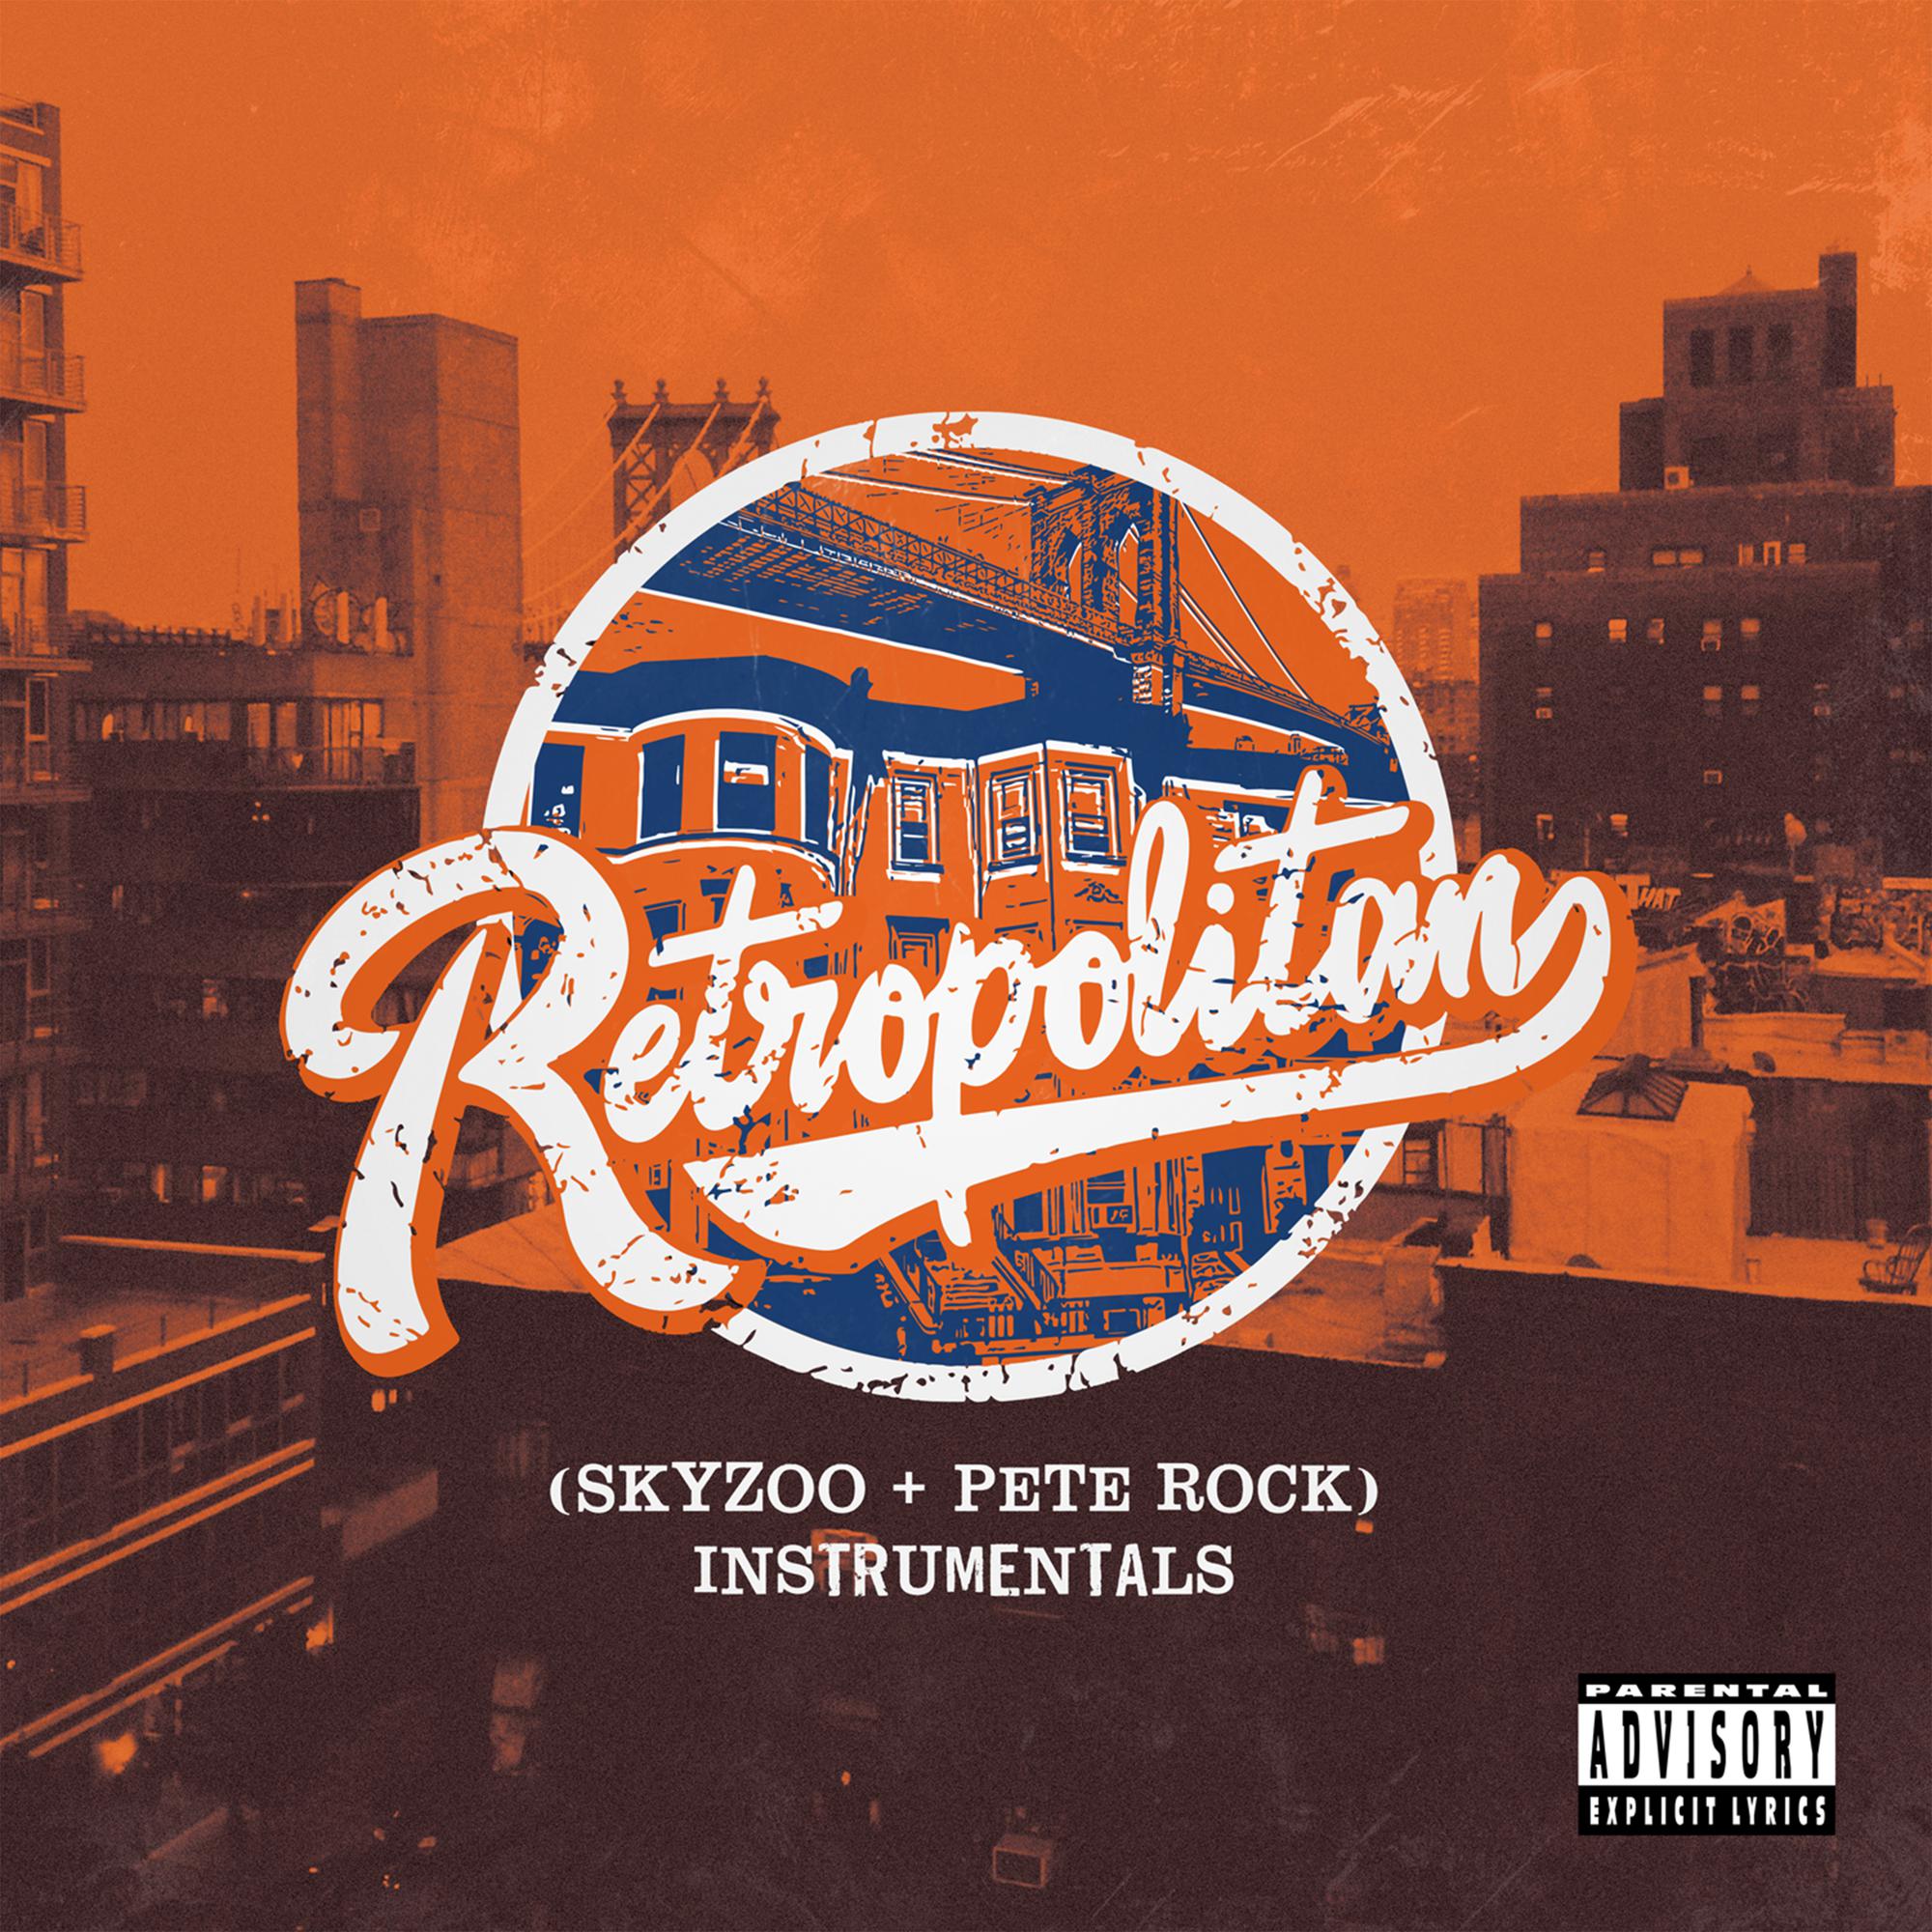 SKYZOO & PETE ROCK - Retropolitan Instrumentals - LP Limited Orange/Intense White Splatter Vinyl [RSD2020-AUG29]